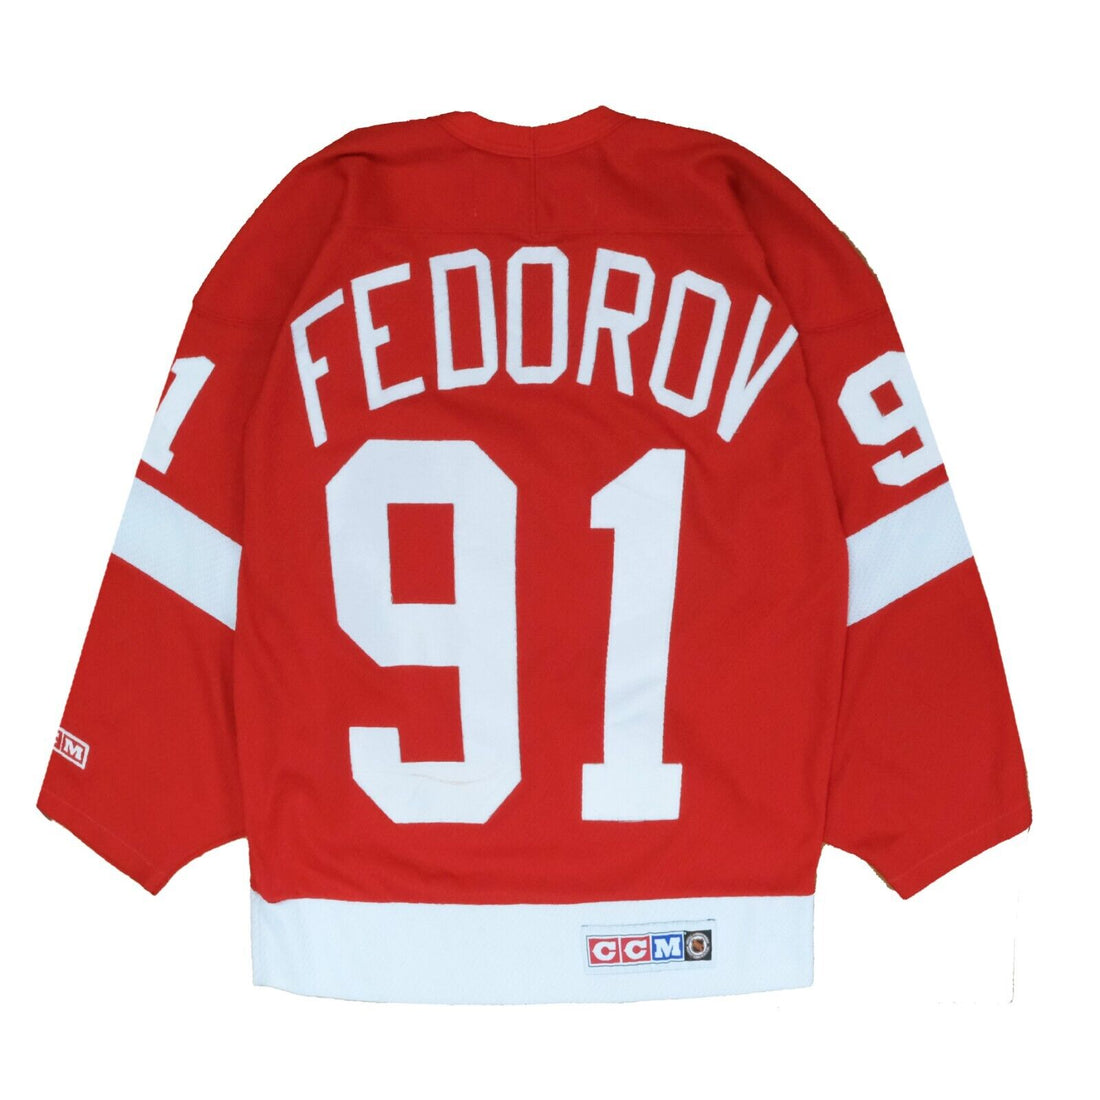 Fedorov Nike Hockey Jersey Red Wings Detroit